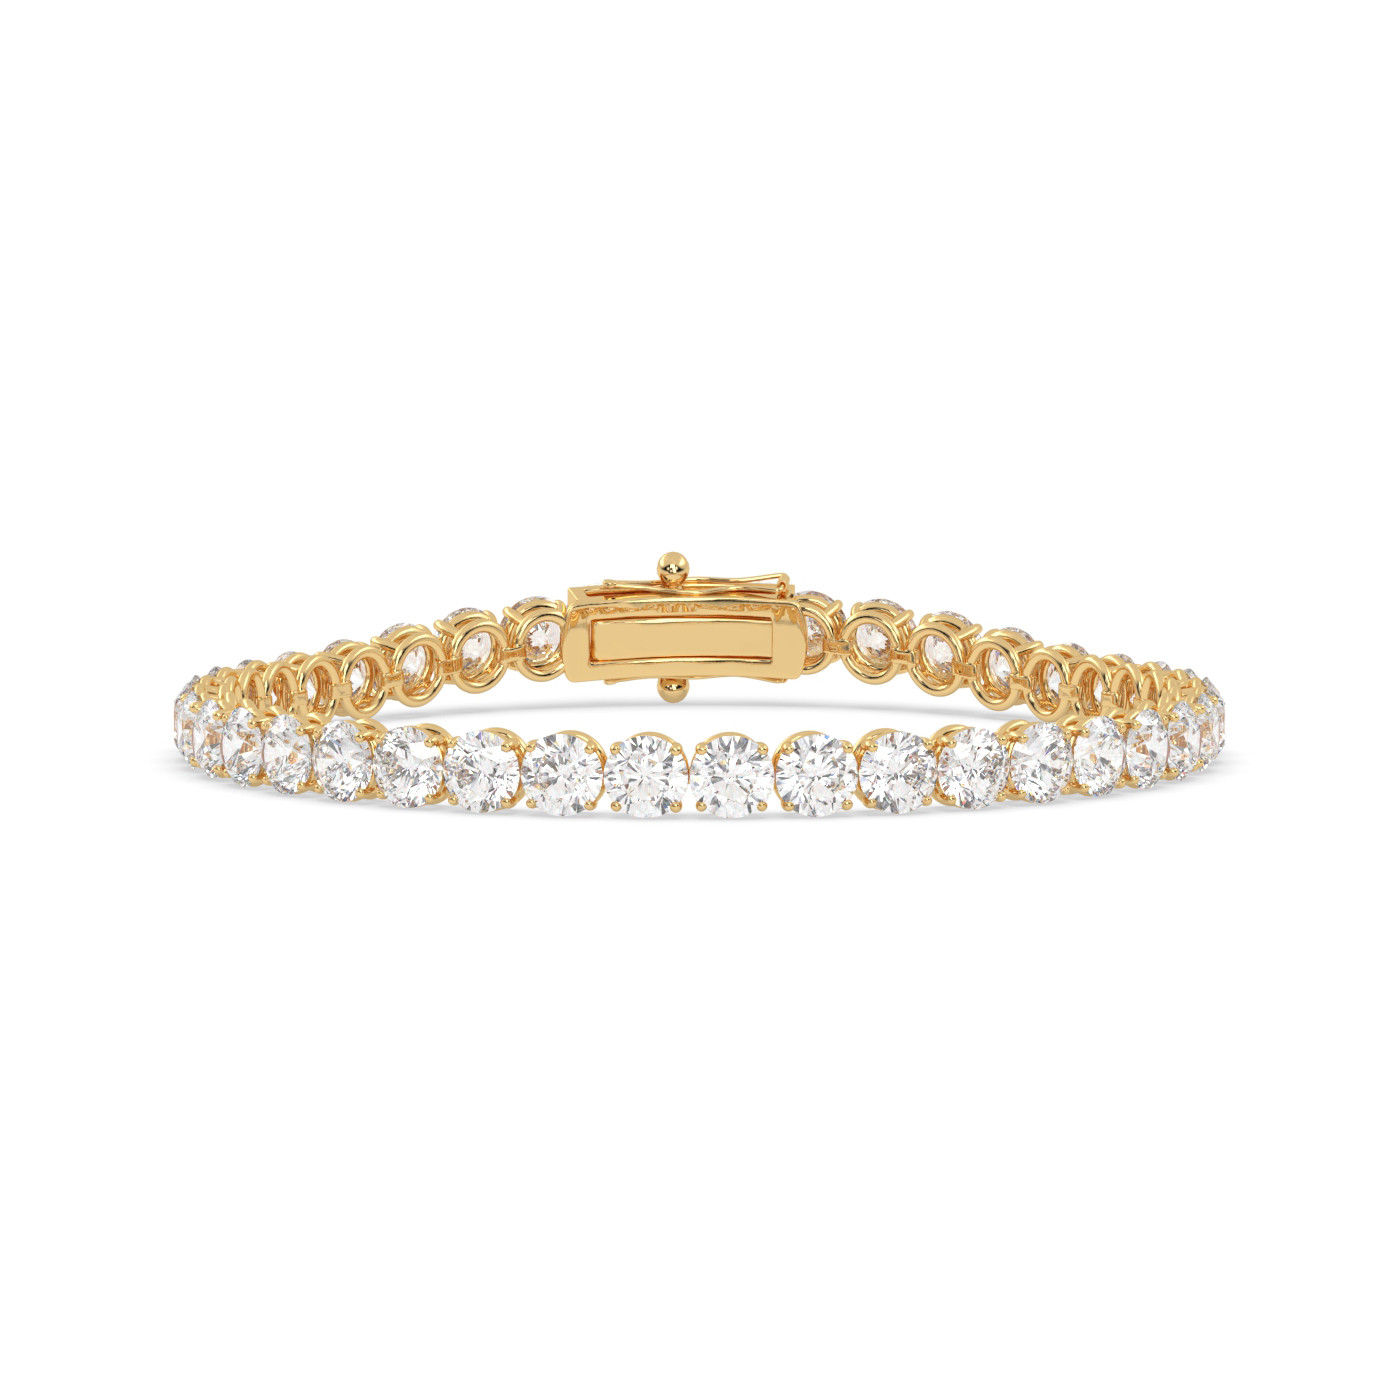 18k yellow gold  3.0 carat round diamond tennis bracelet with traditional lock sytem Photos & images